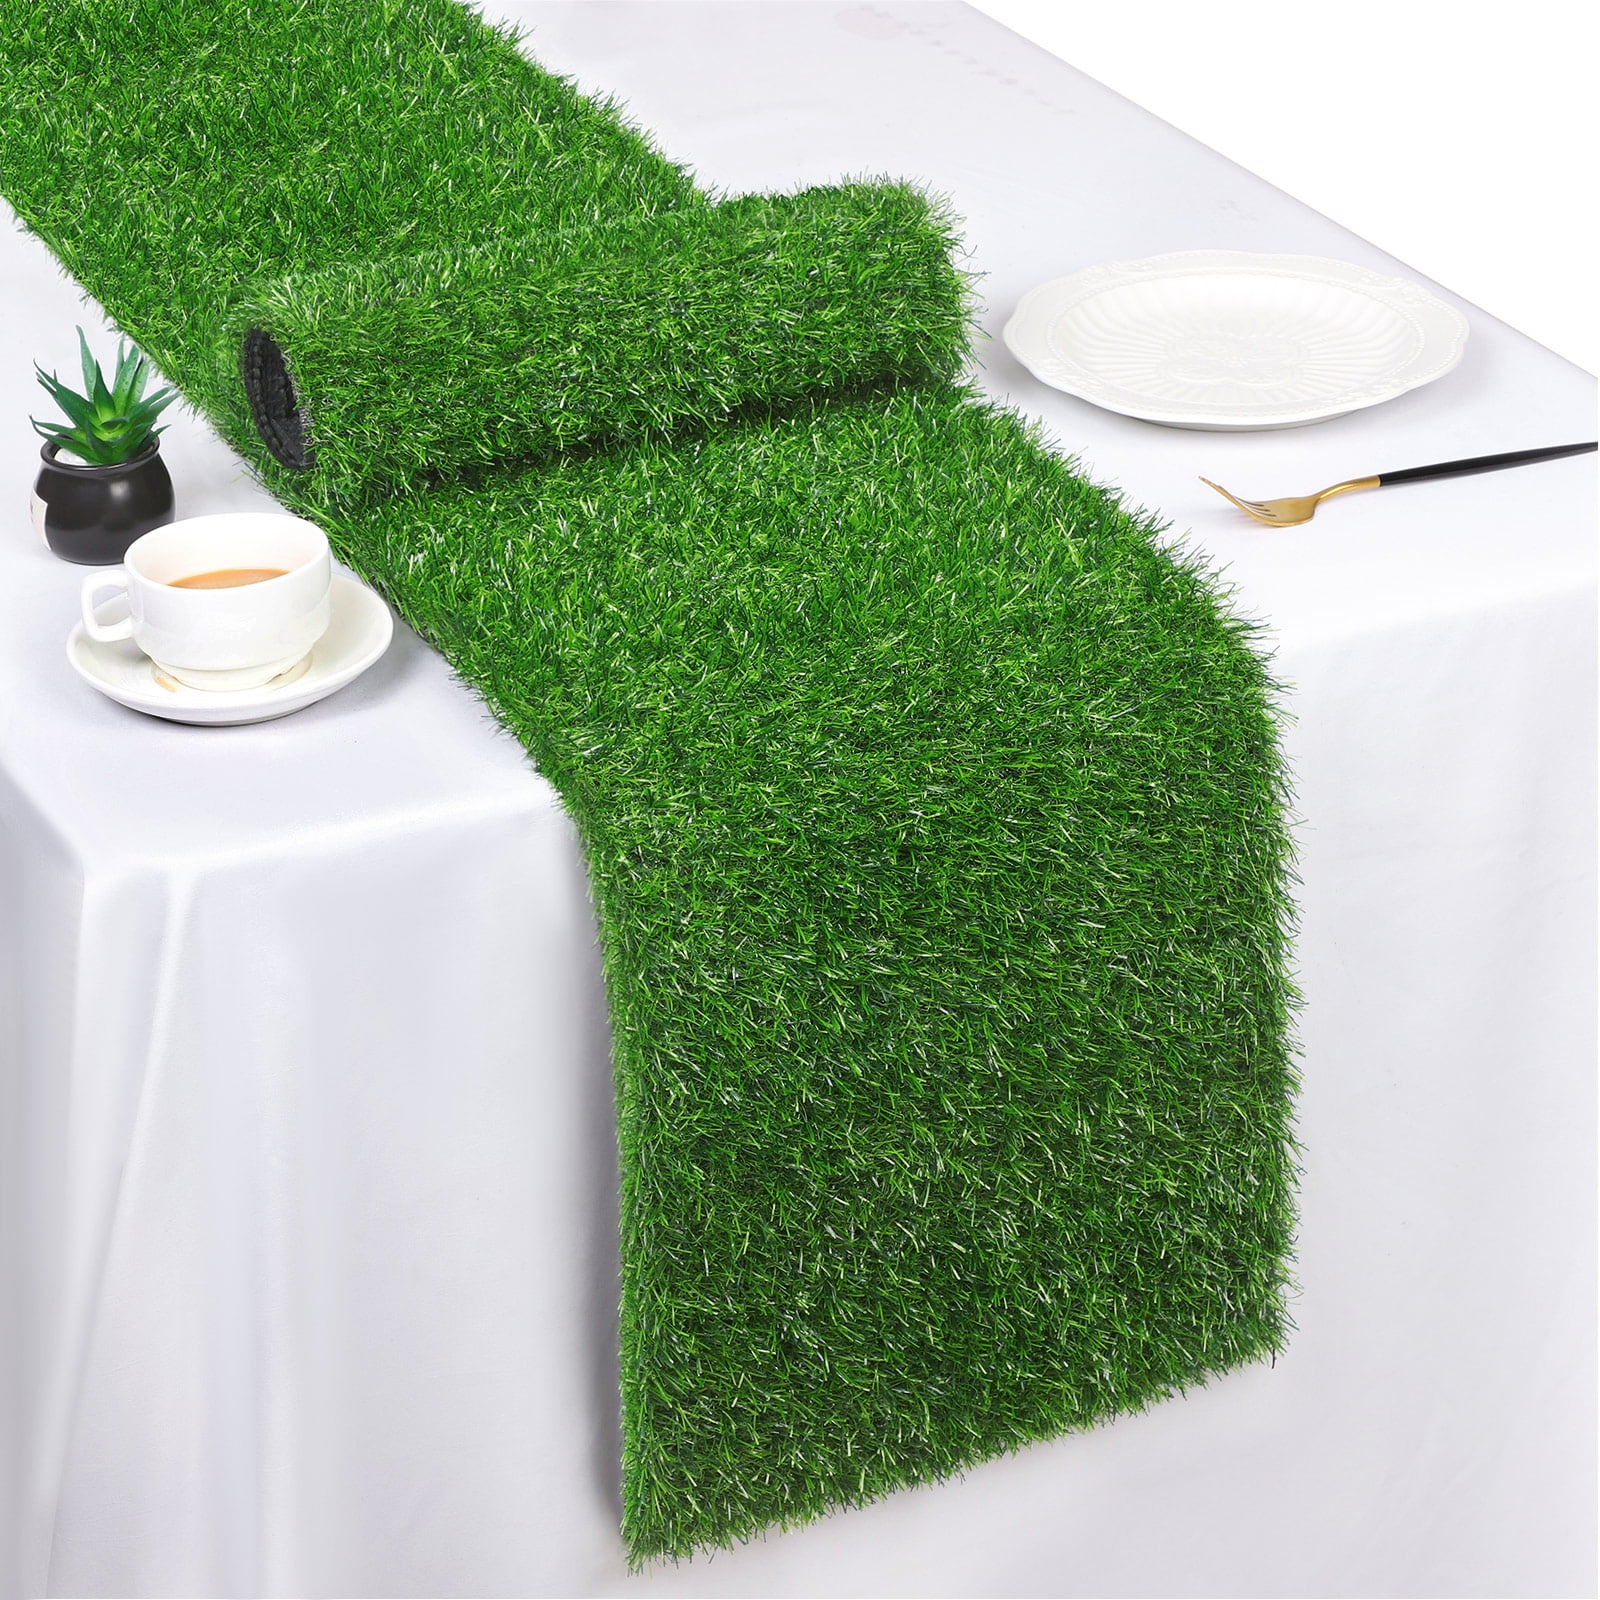  Luchuan Artificial Grass Table Runner for Table